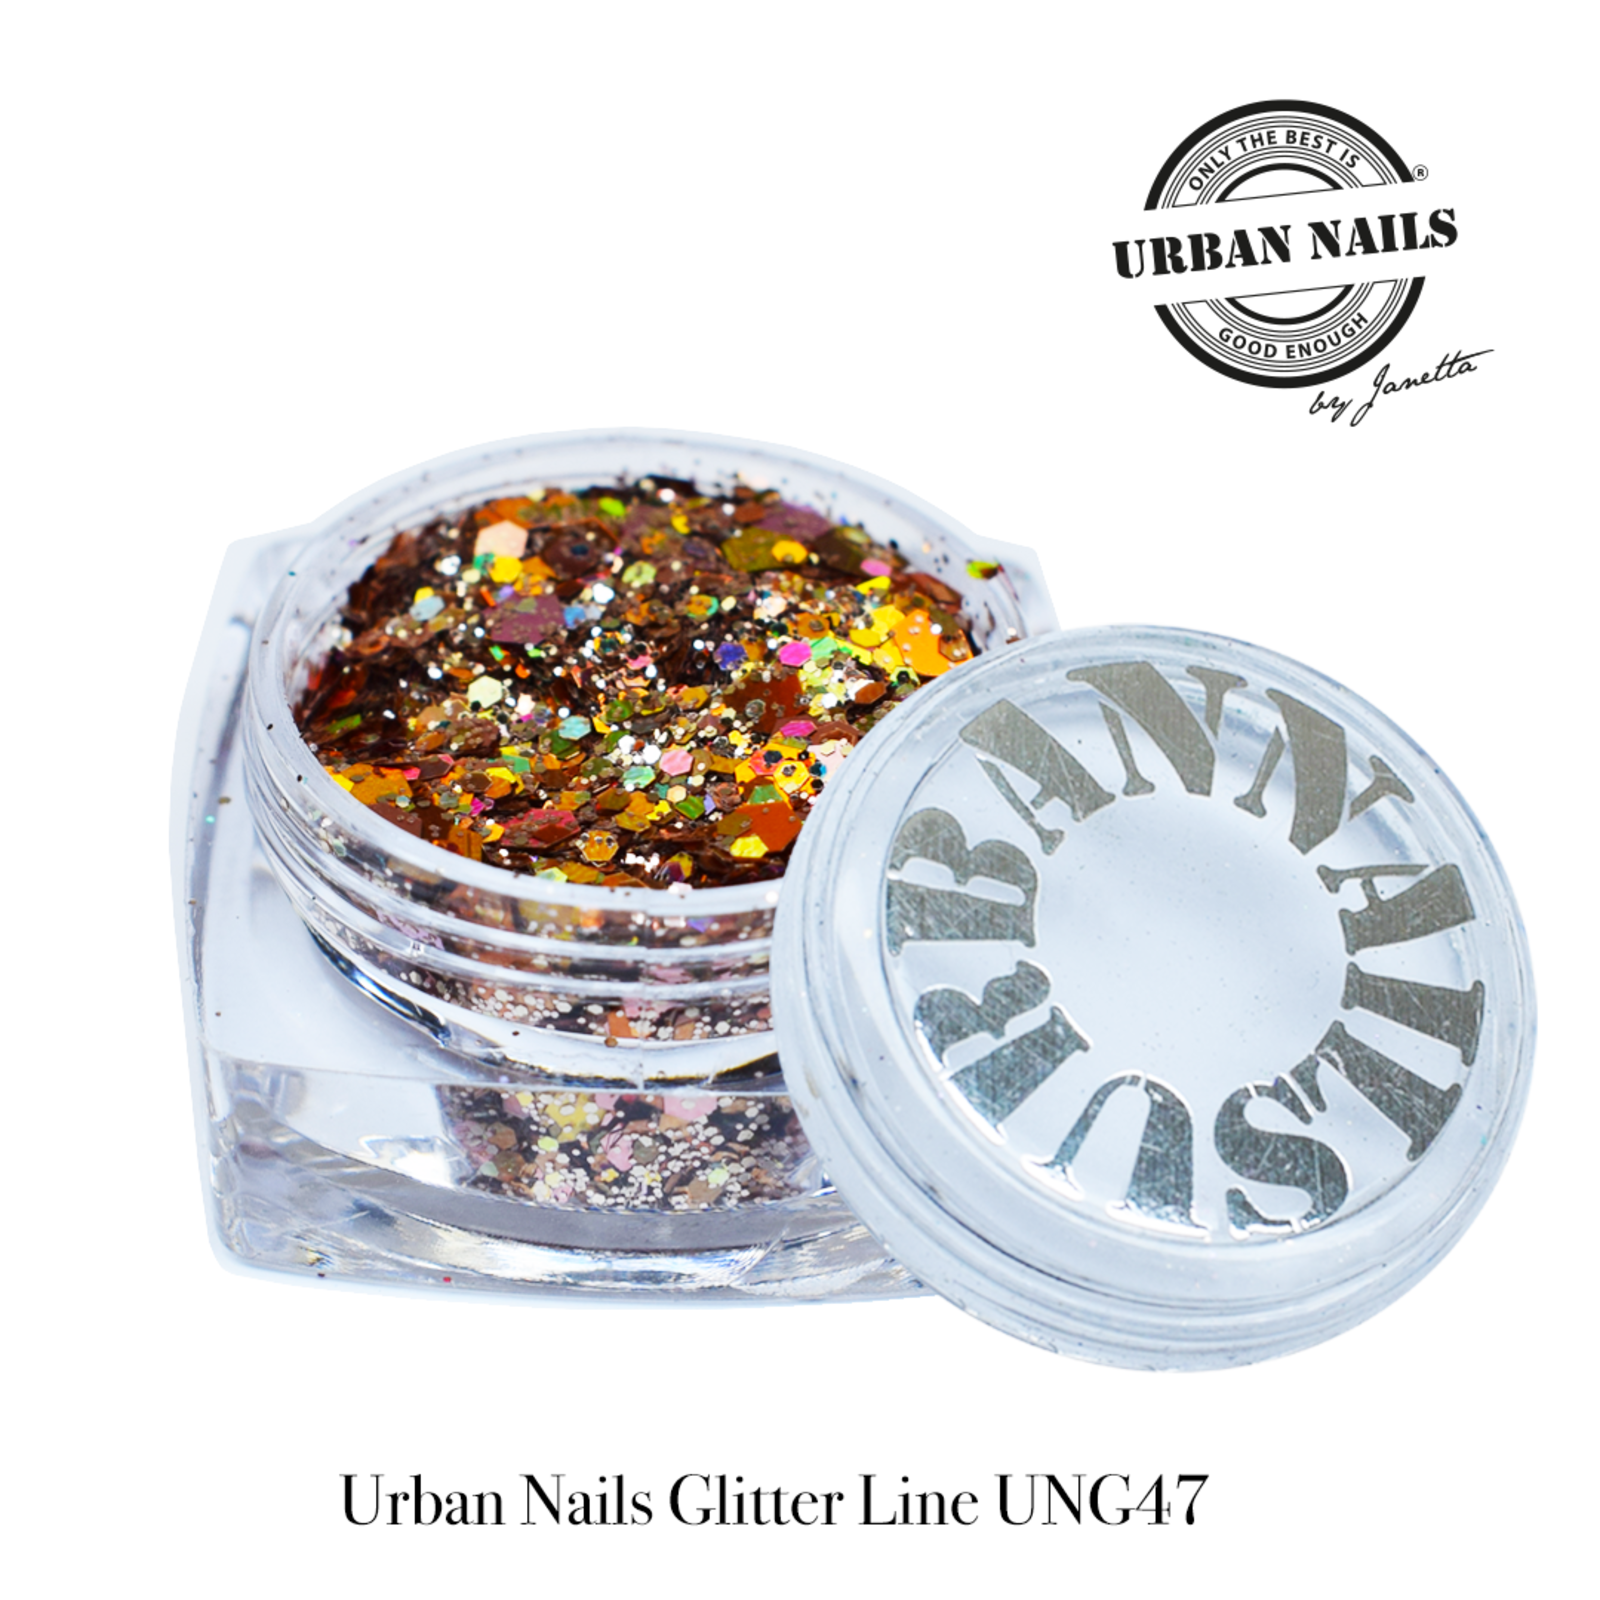 Urban nails Glitter Line UNG47